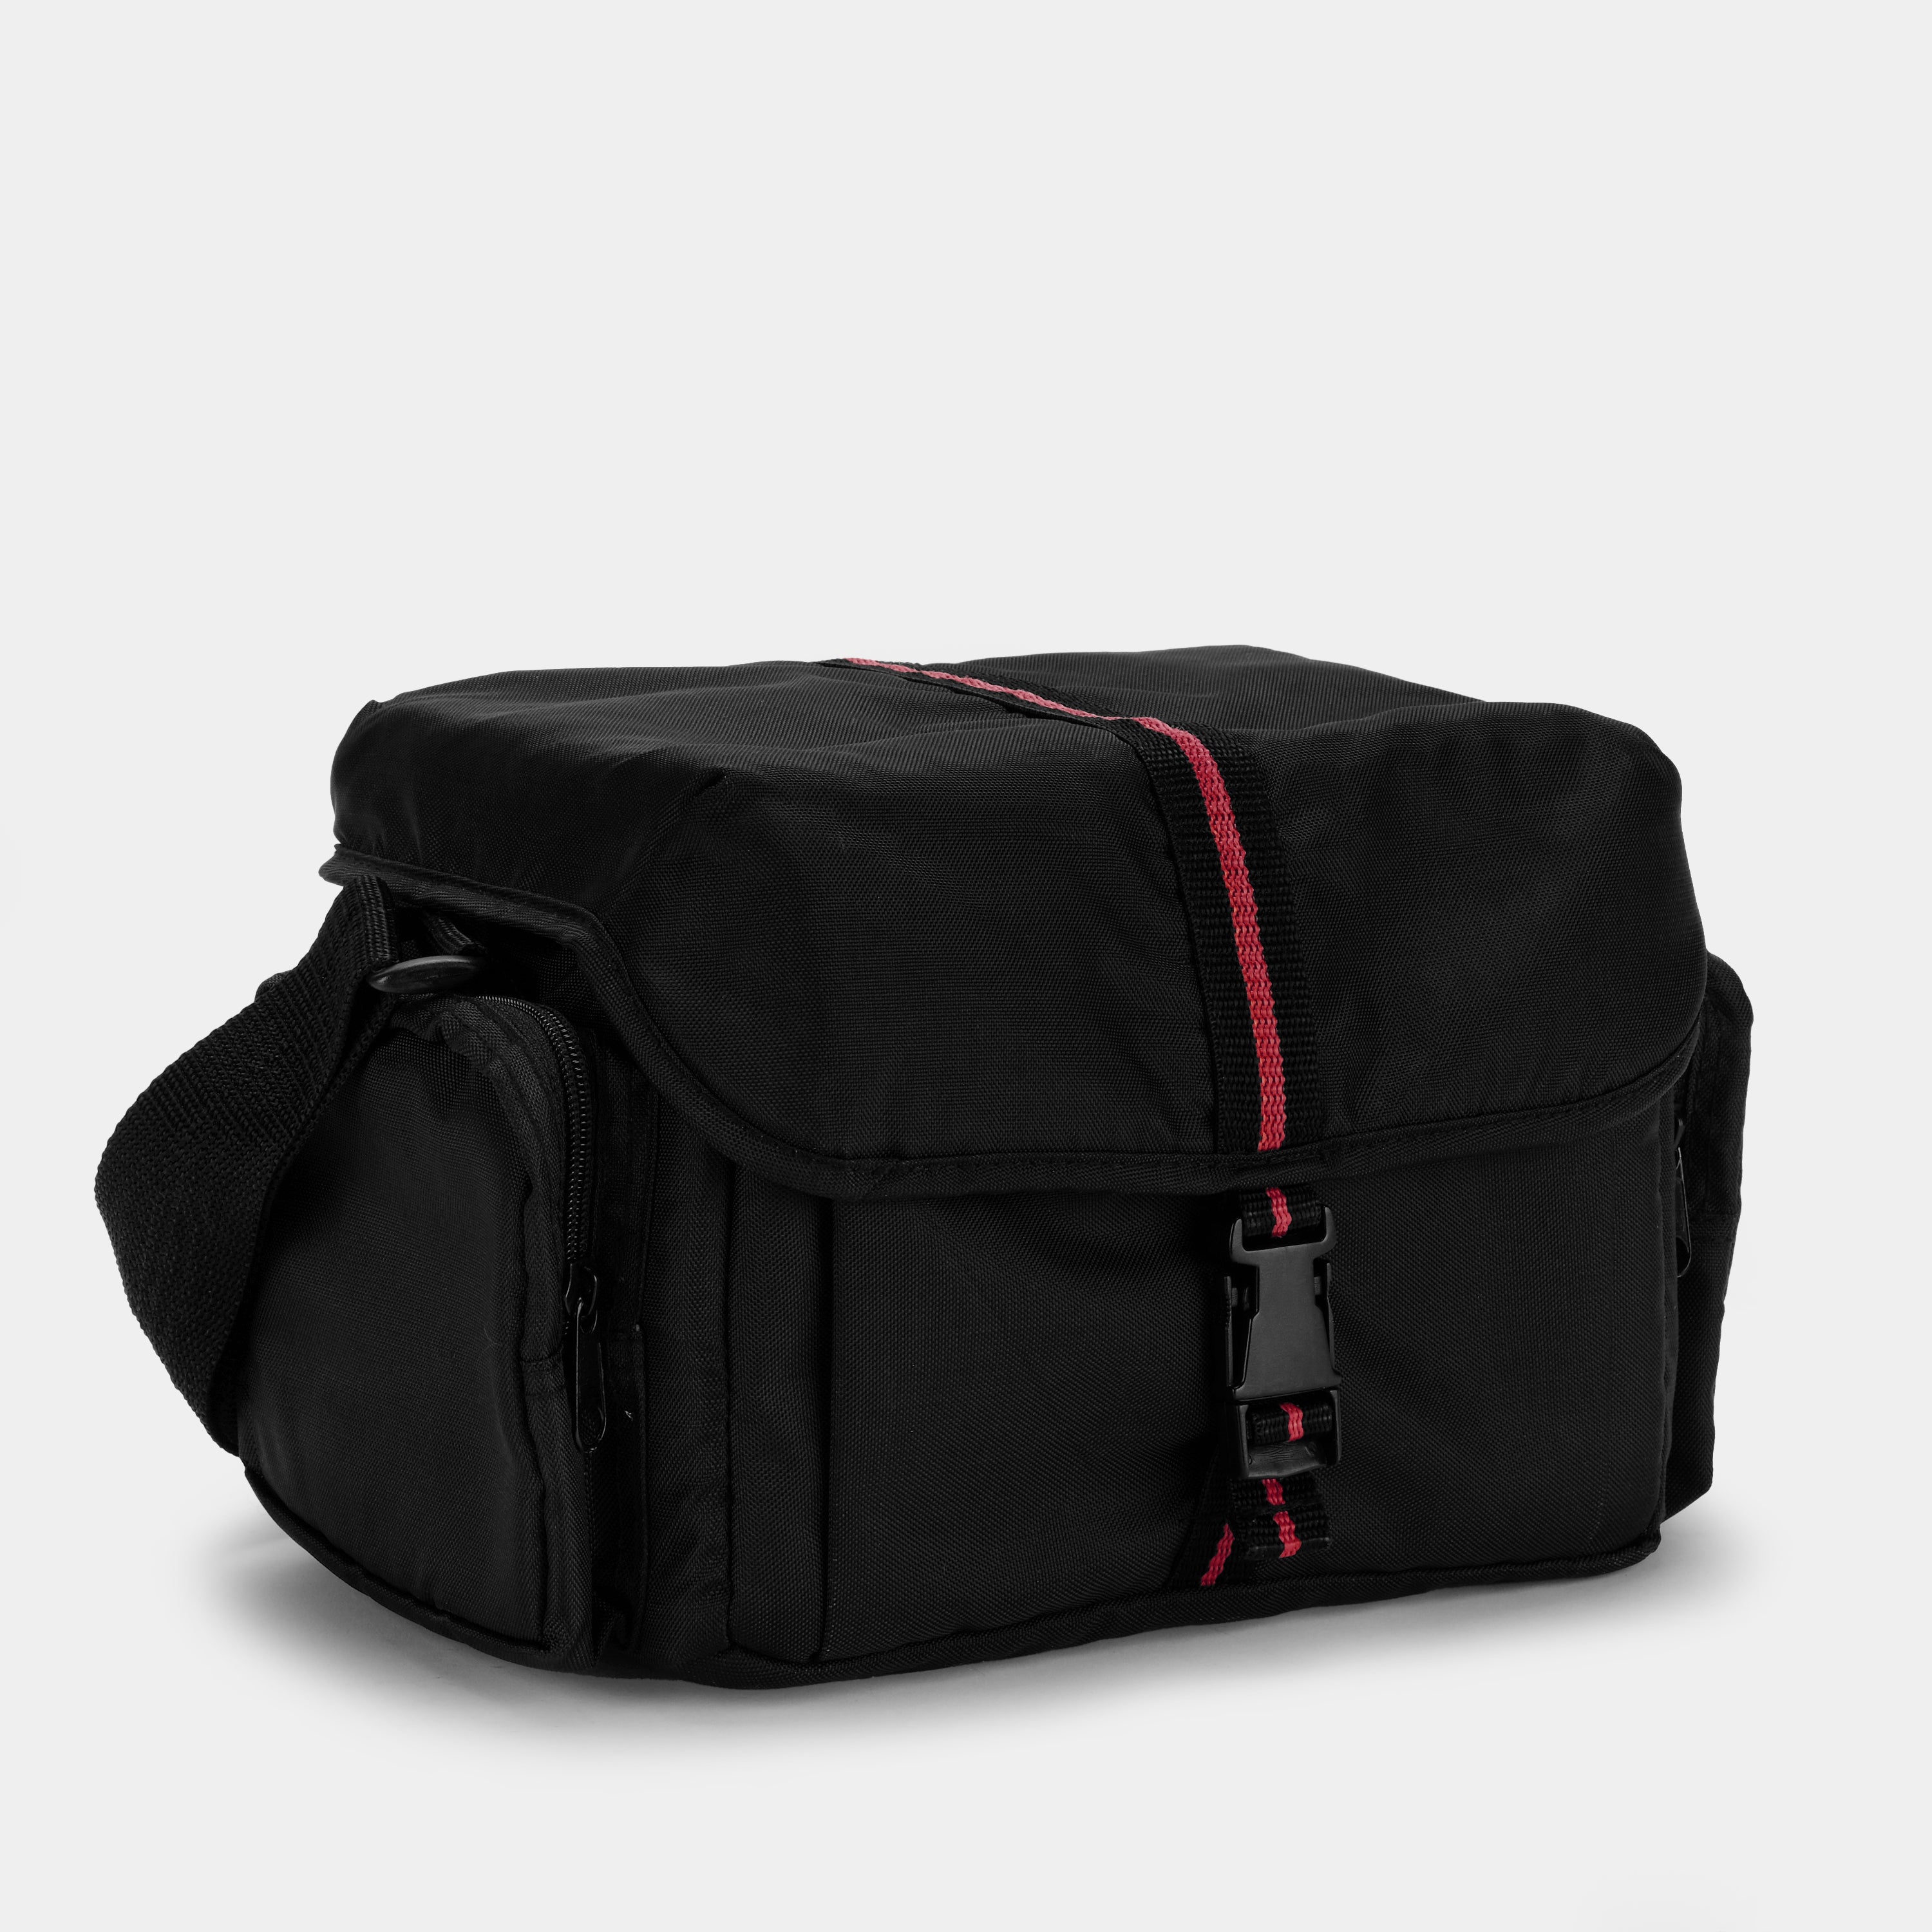 Black with Red Stripe Camera Bag